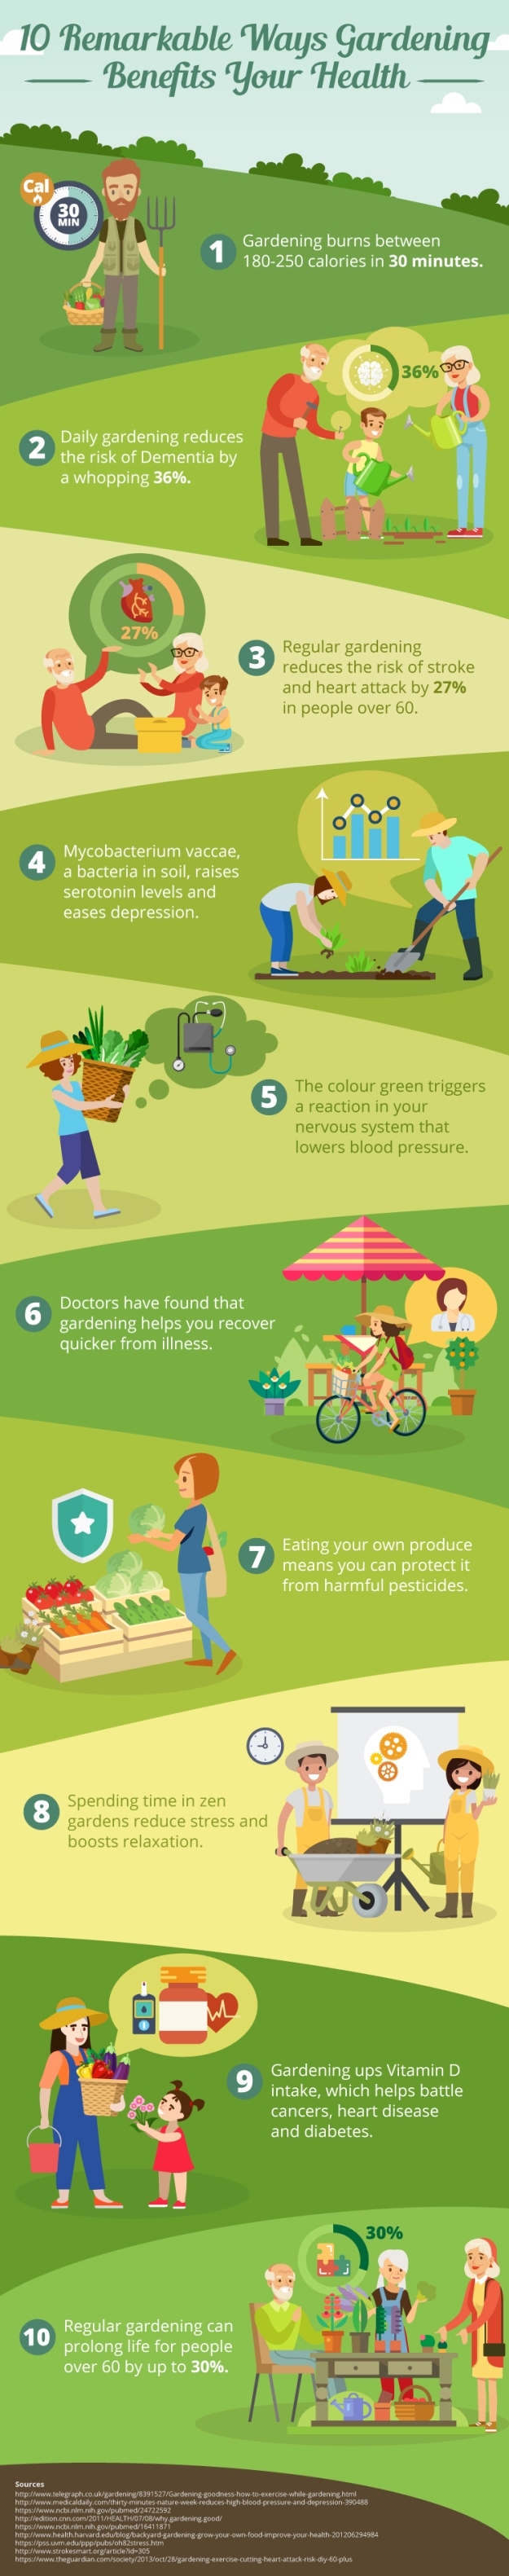 10 Remarkable Ways Gardening Benefits Your Health